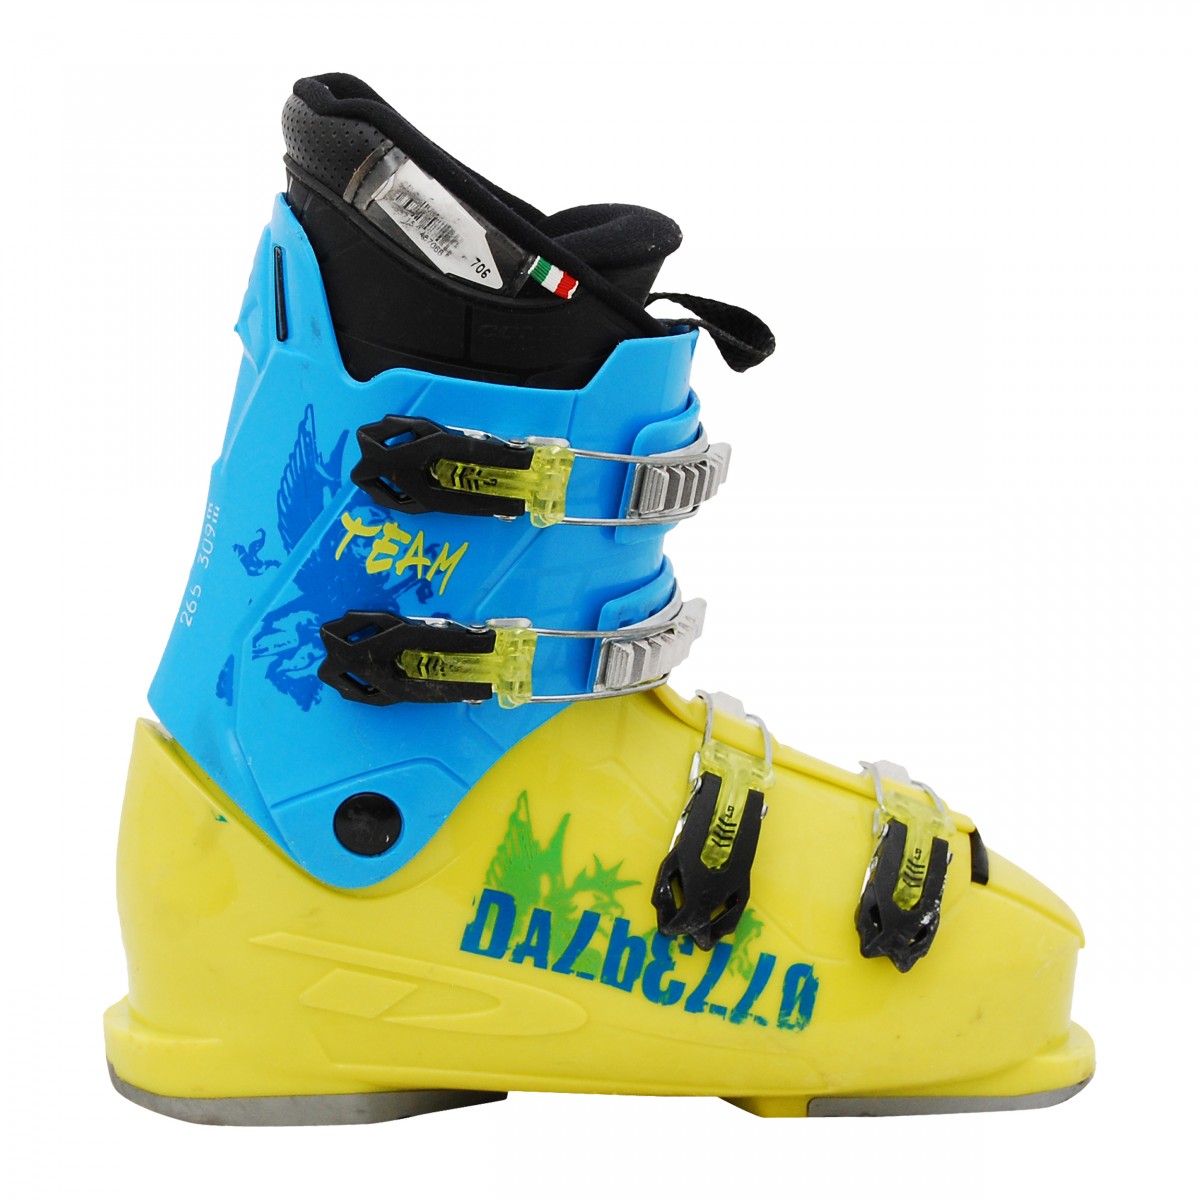 Chaussure de ski occasion junior Dalbello CX bleu/jaune